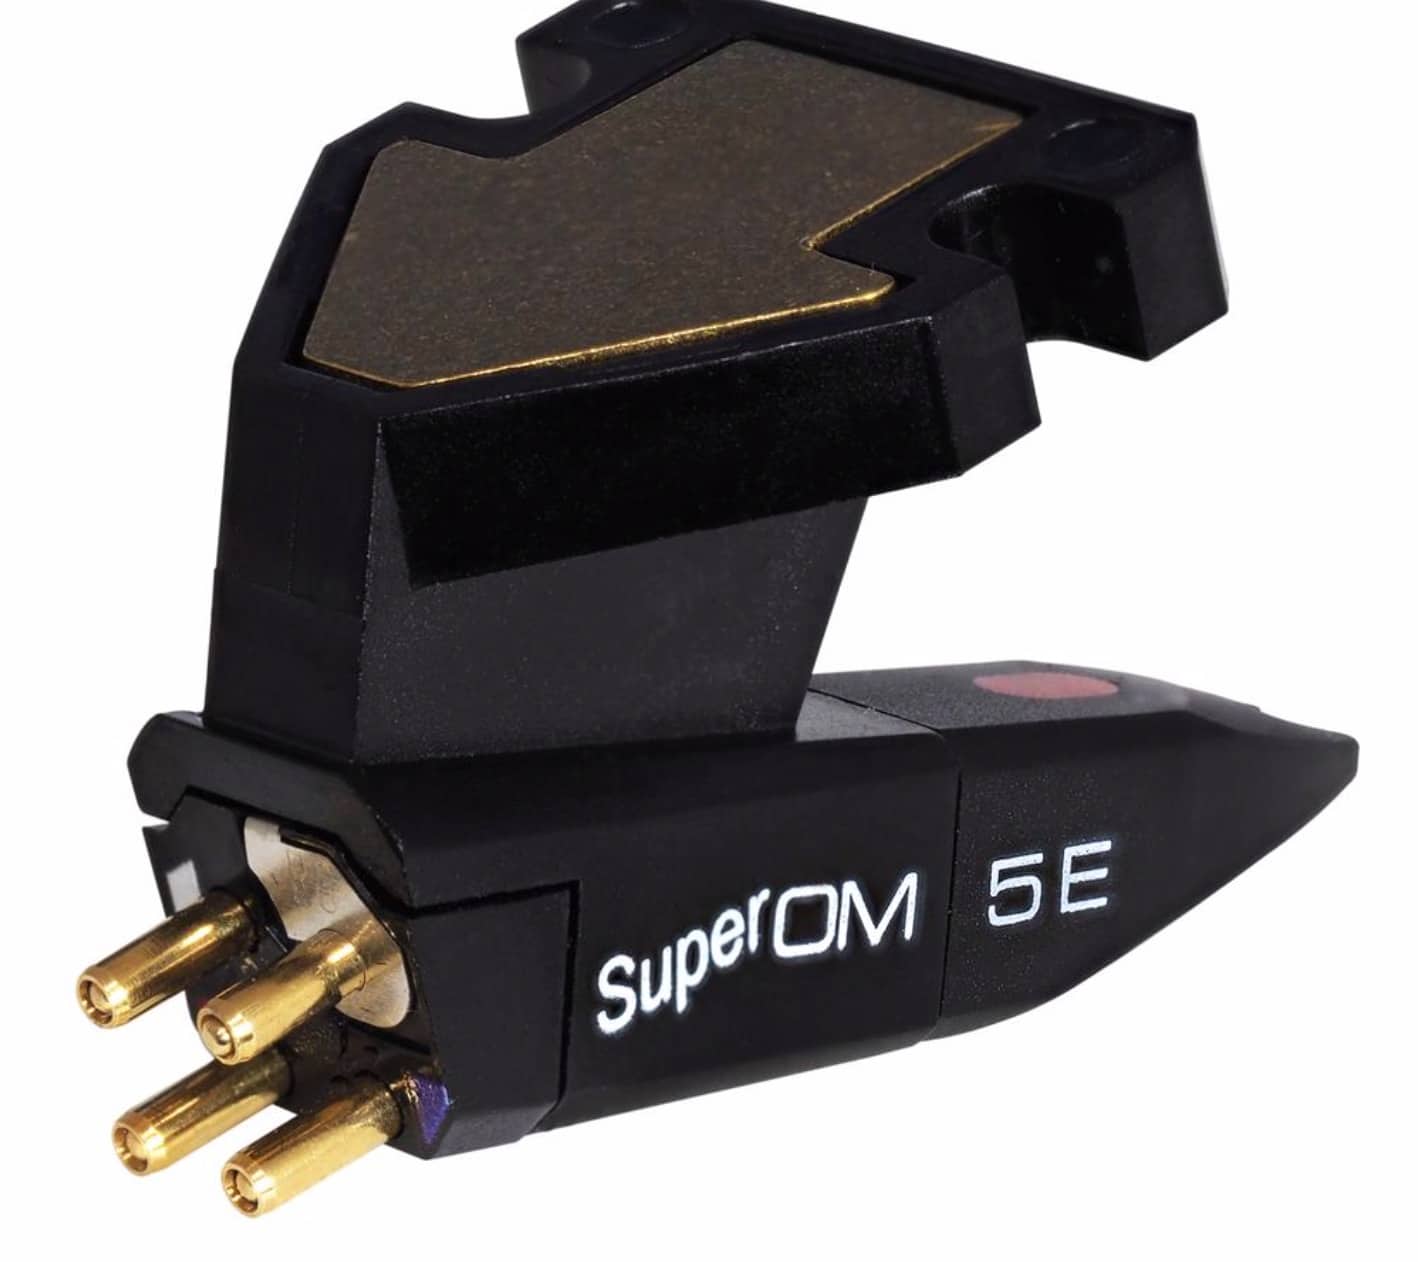 Super OM 5E Cartridge From Ortofon